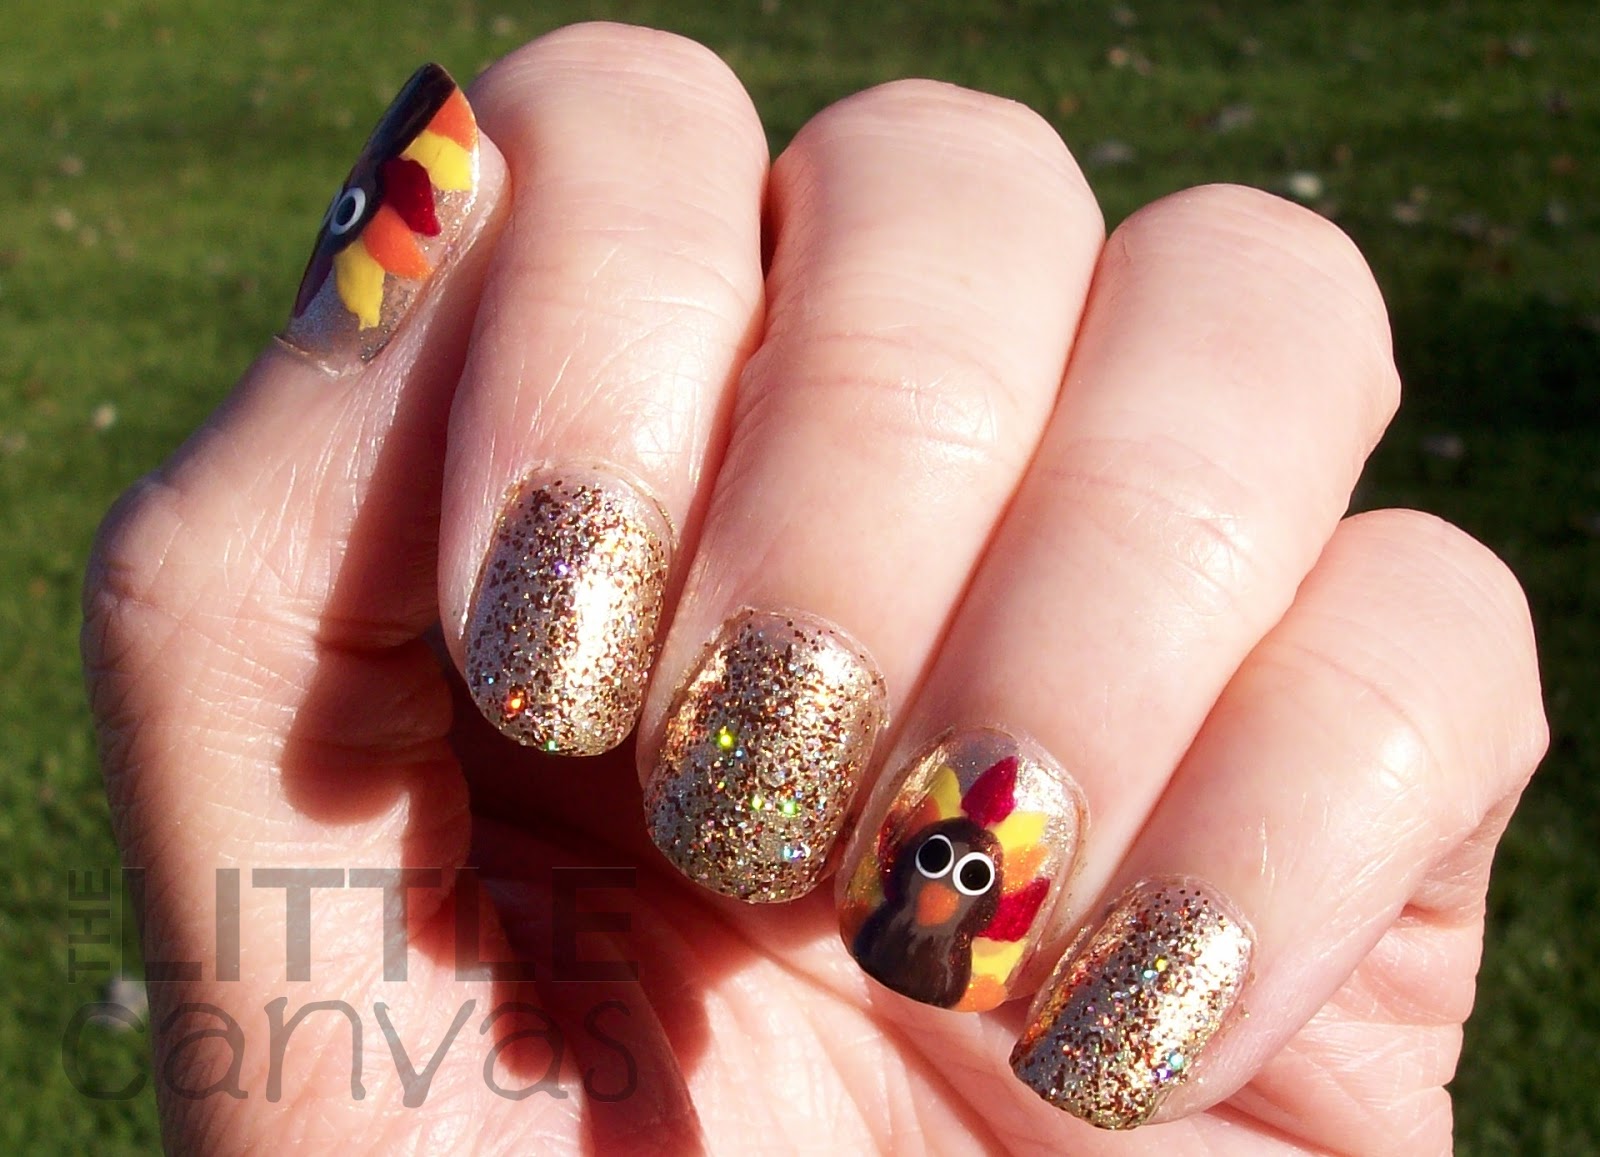 1. "Turkey Nail Art Design for Thanksgiving" - wide 9